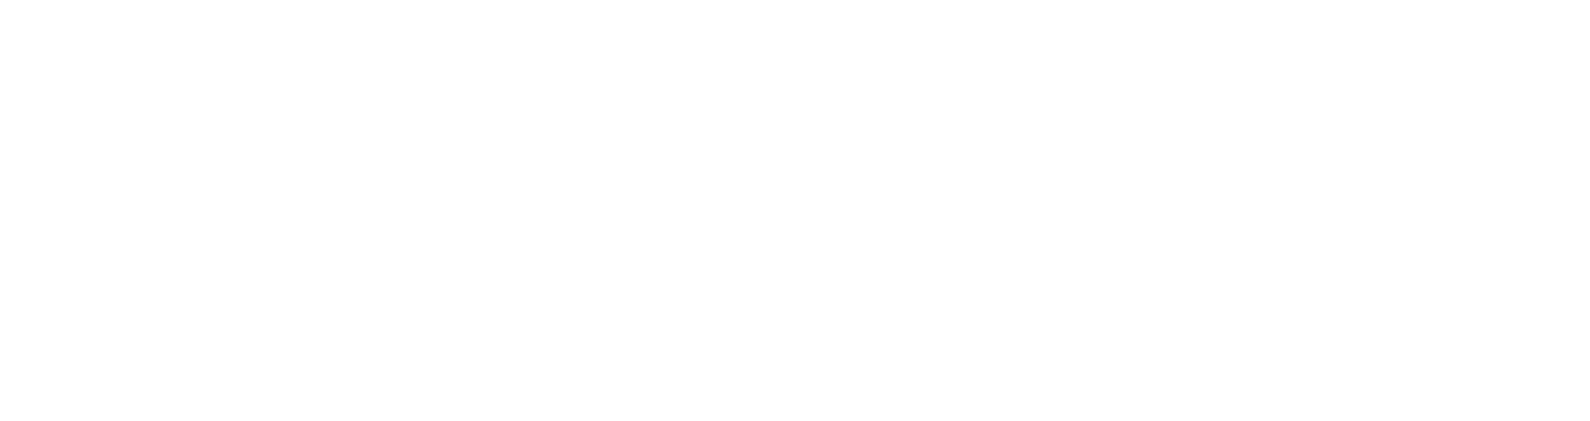 Remitly logo large for dark backgrounds (transparent PNG)